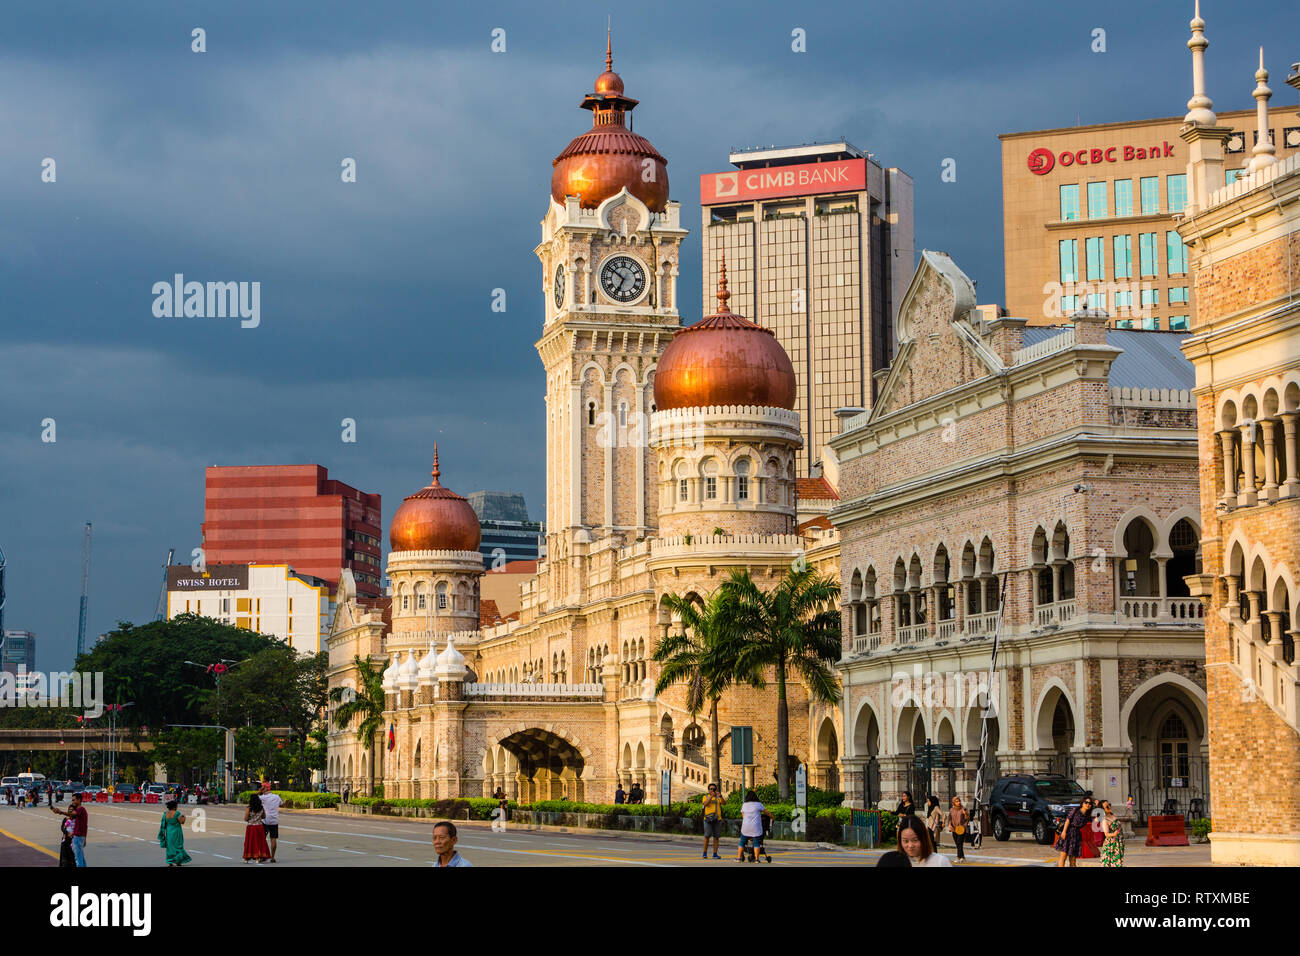 Moorish Architecture. Sultan Abdul Samad Building, former seat of British Colonial Administration. Kuala Lumpur, Malaysia. Stock Photo